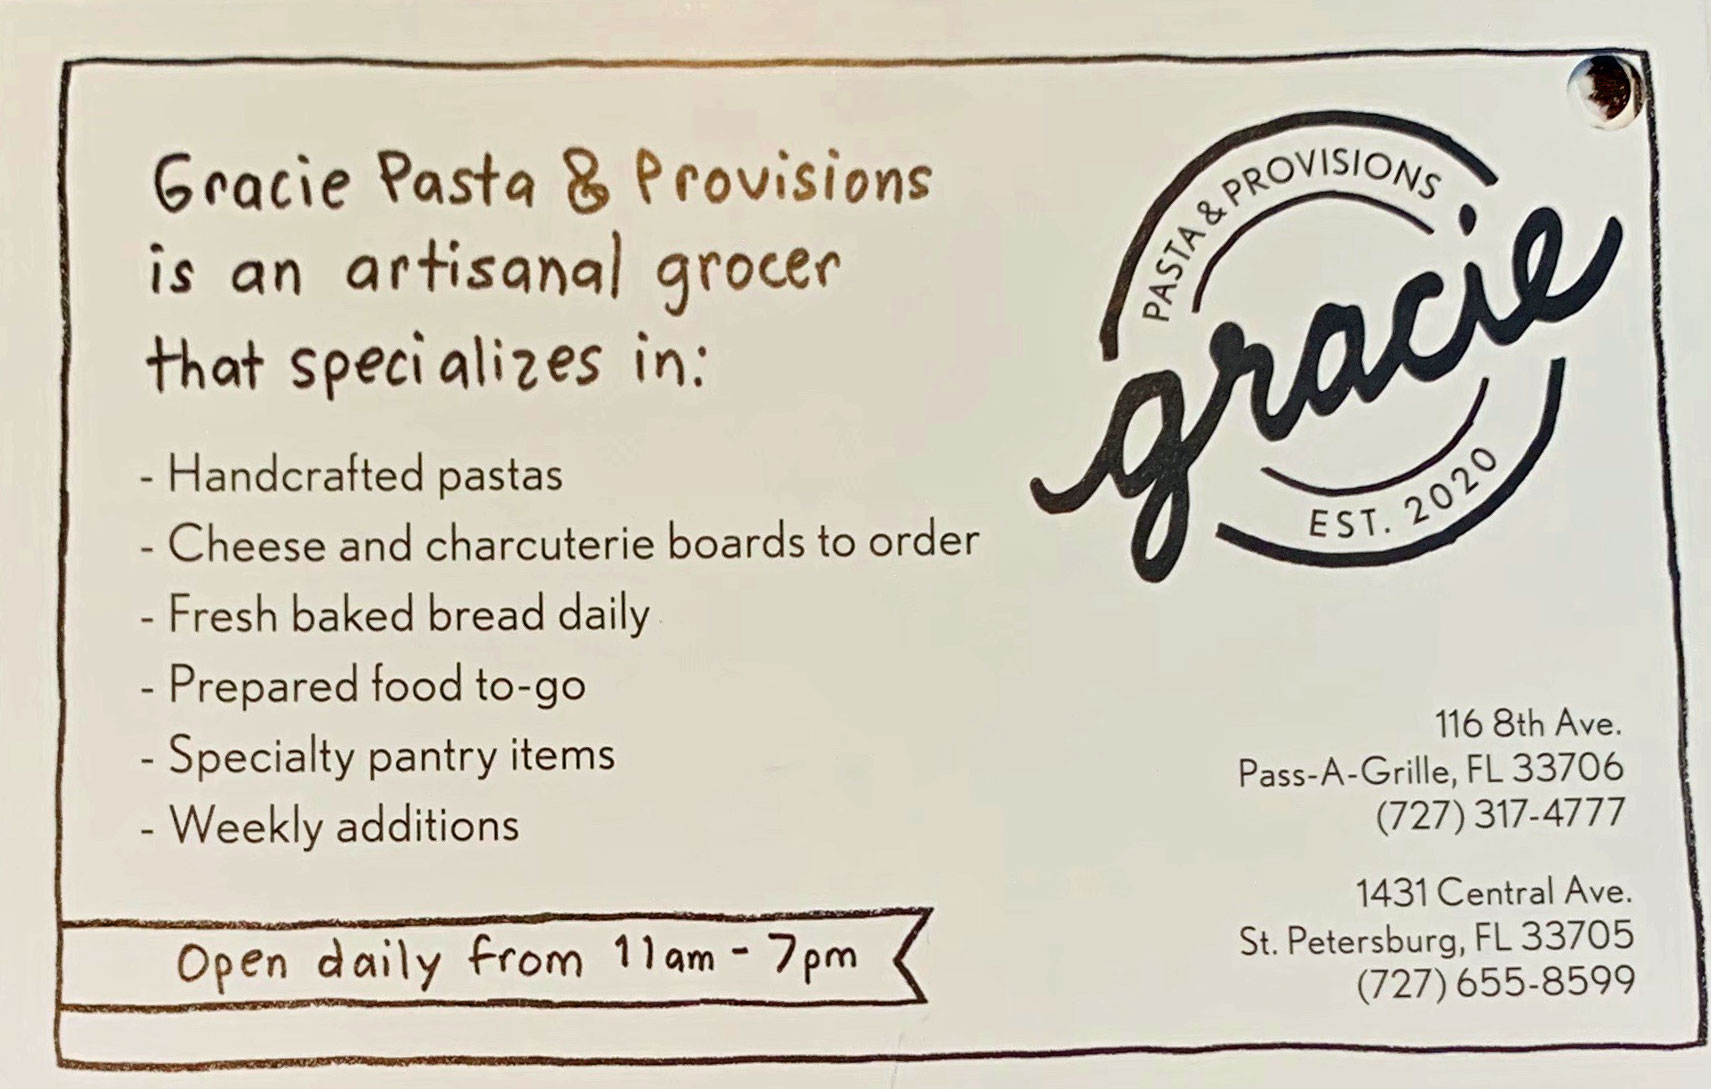 Gracie Pasta & Provisions